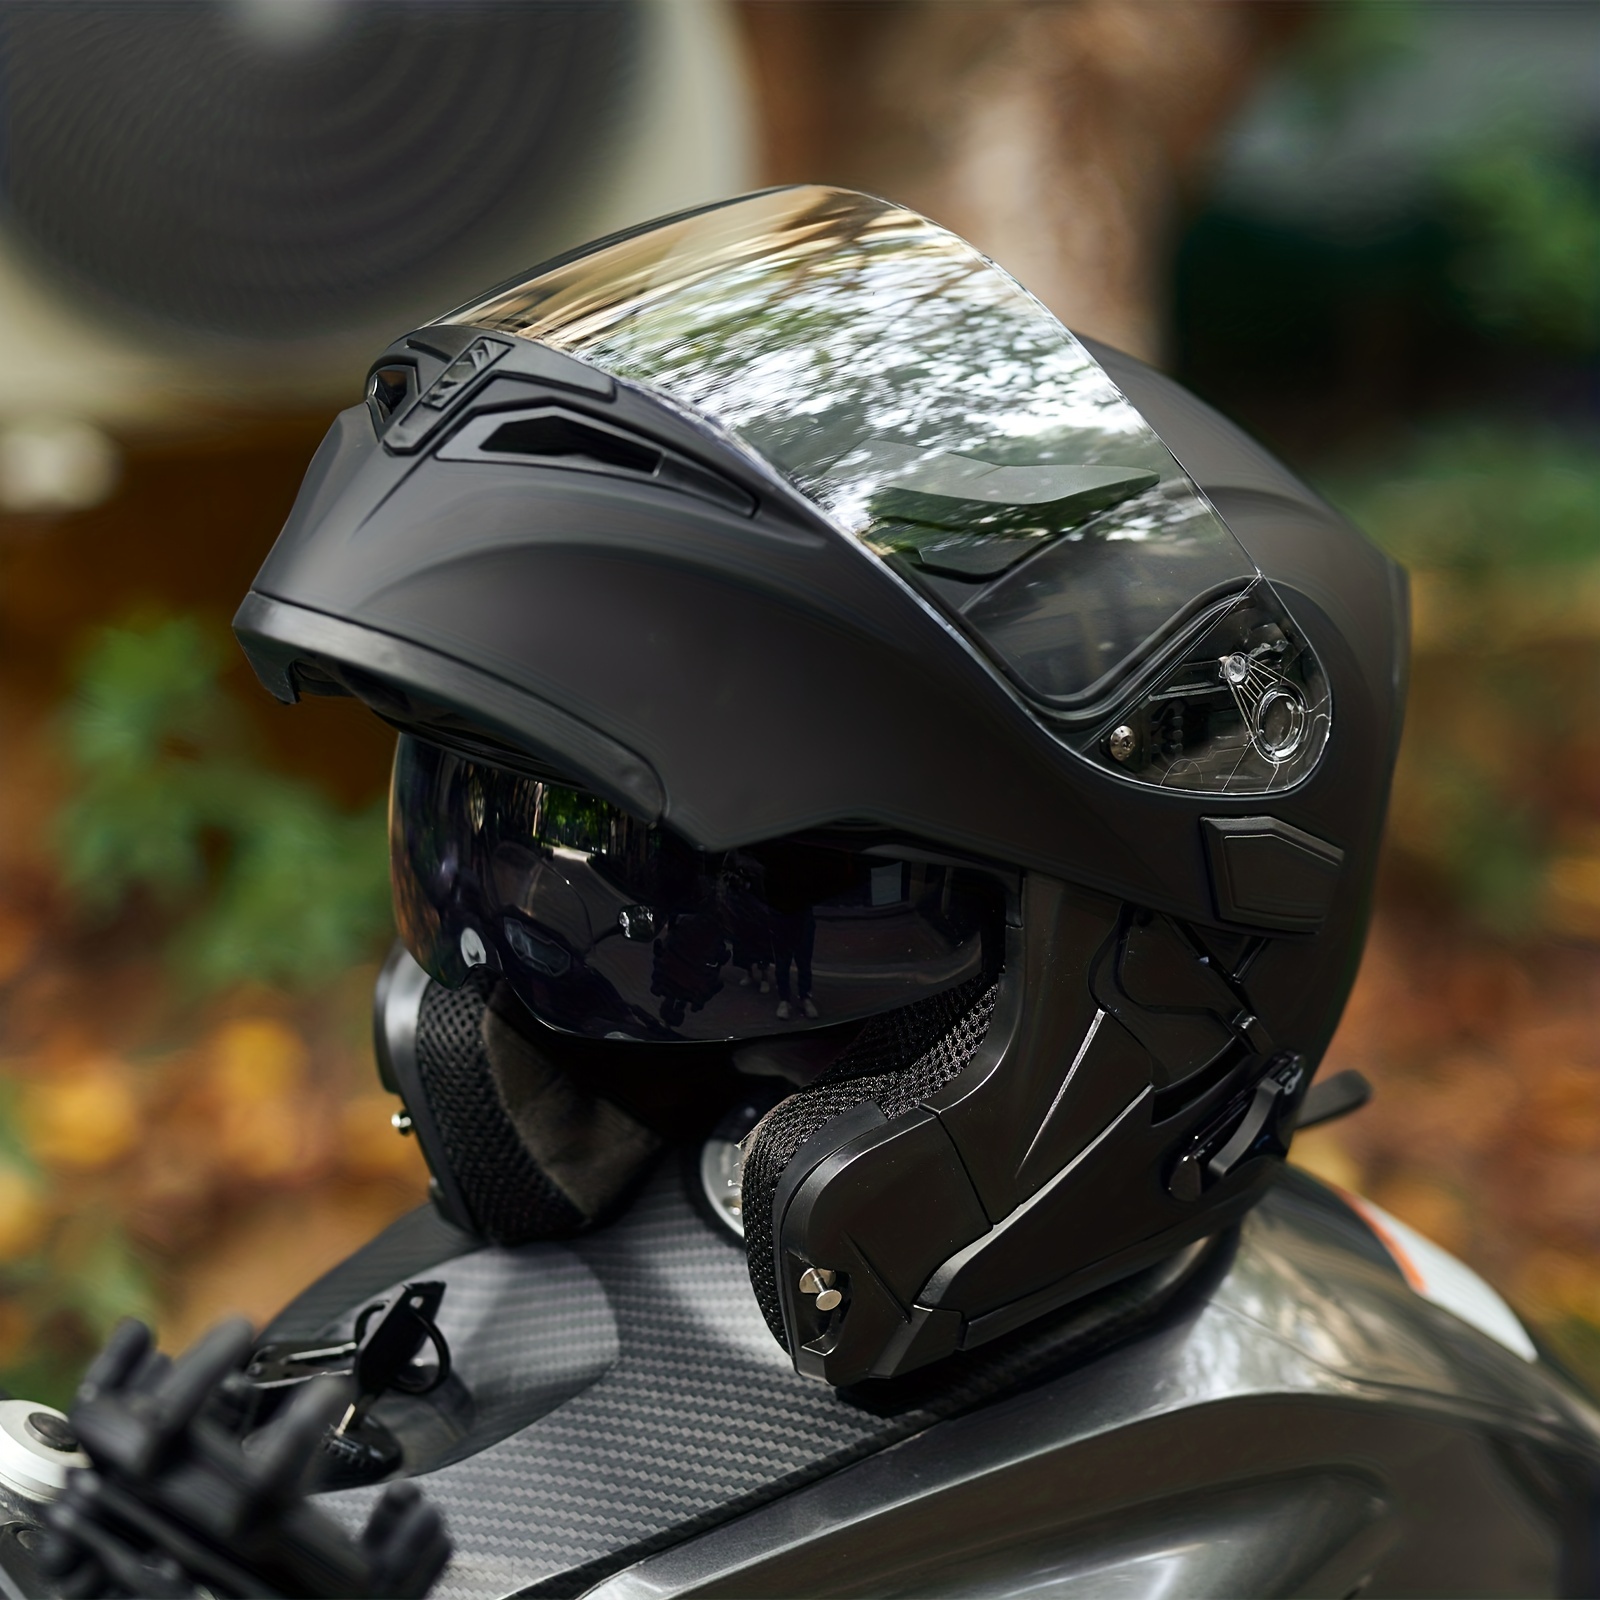 Modular Flip-Up Dual Visor Bluetooth Headset Motorcycle Helmet